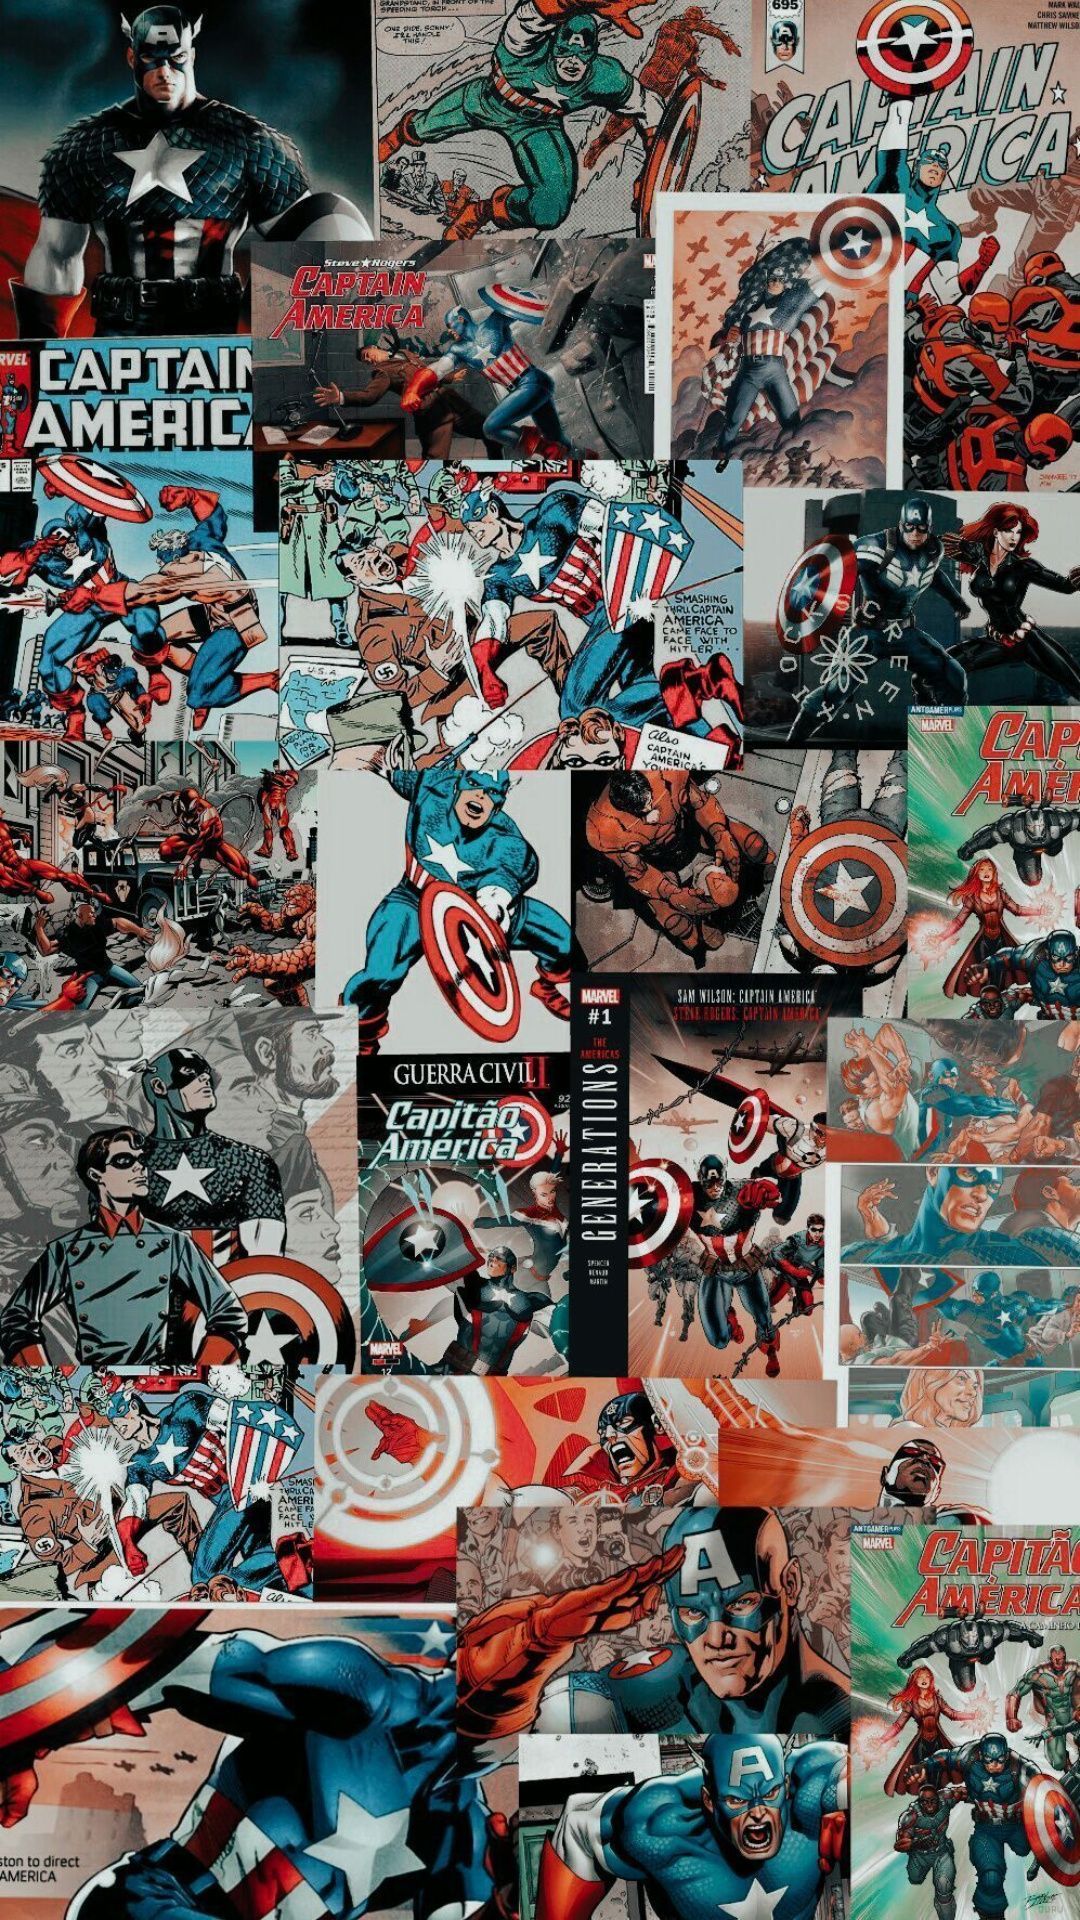 Captain America wallpaper for your phone or desktop - Captain America